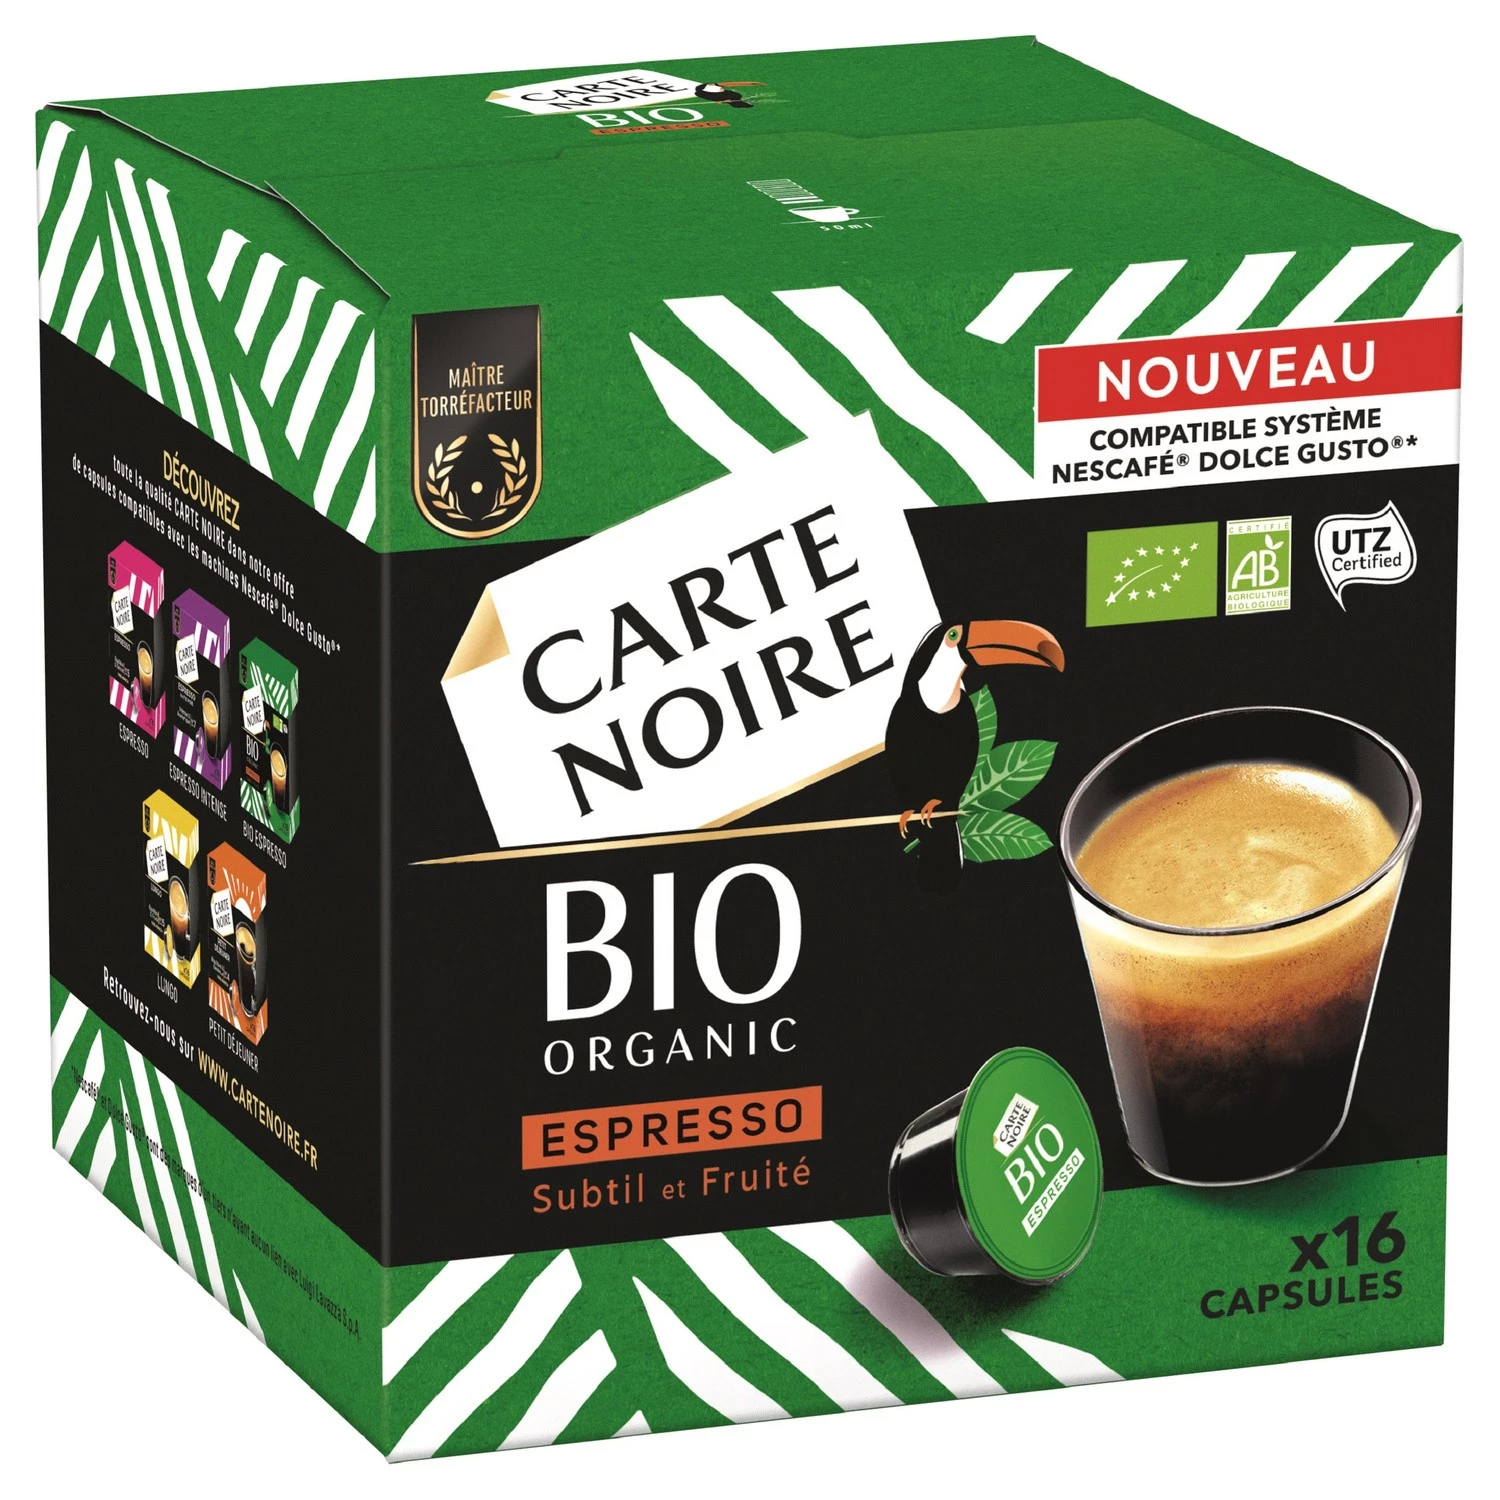 Biologische subtiele en fruitige espressokoffie x16 capsules 128g - CARTE NOIRE